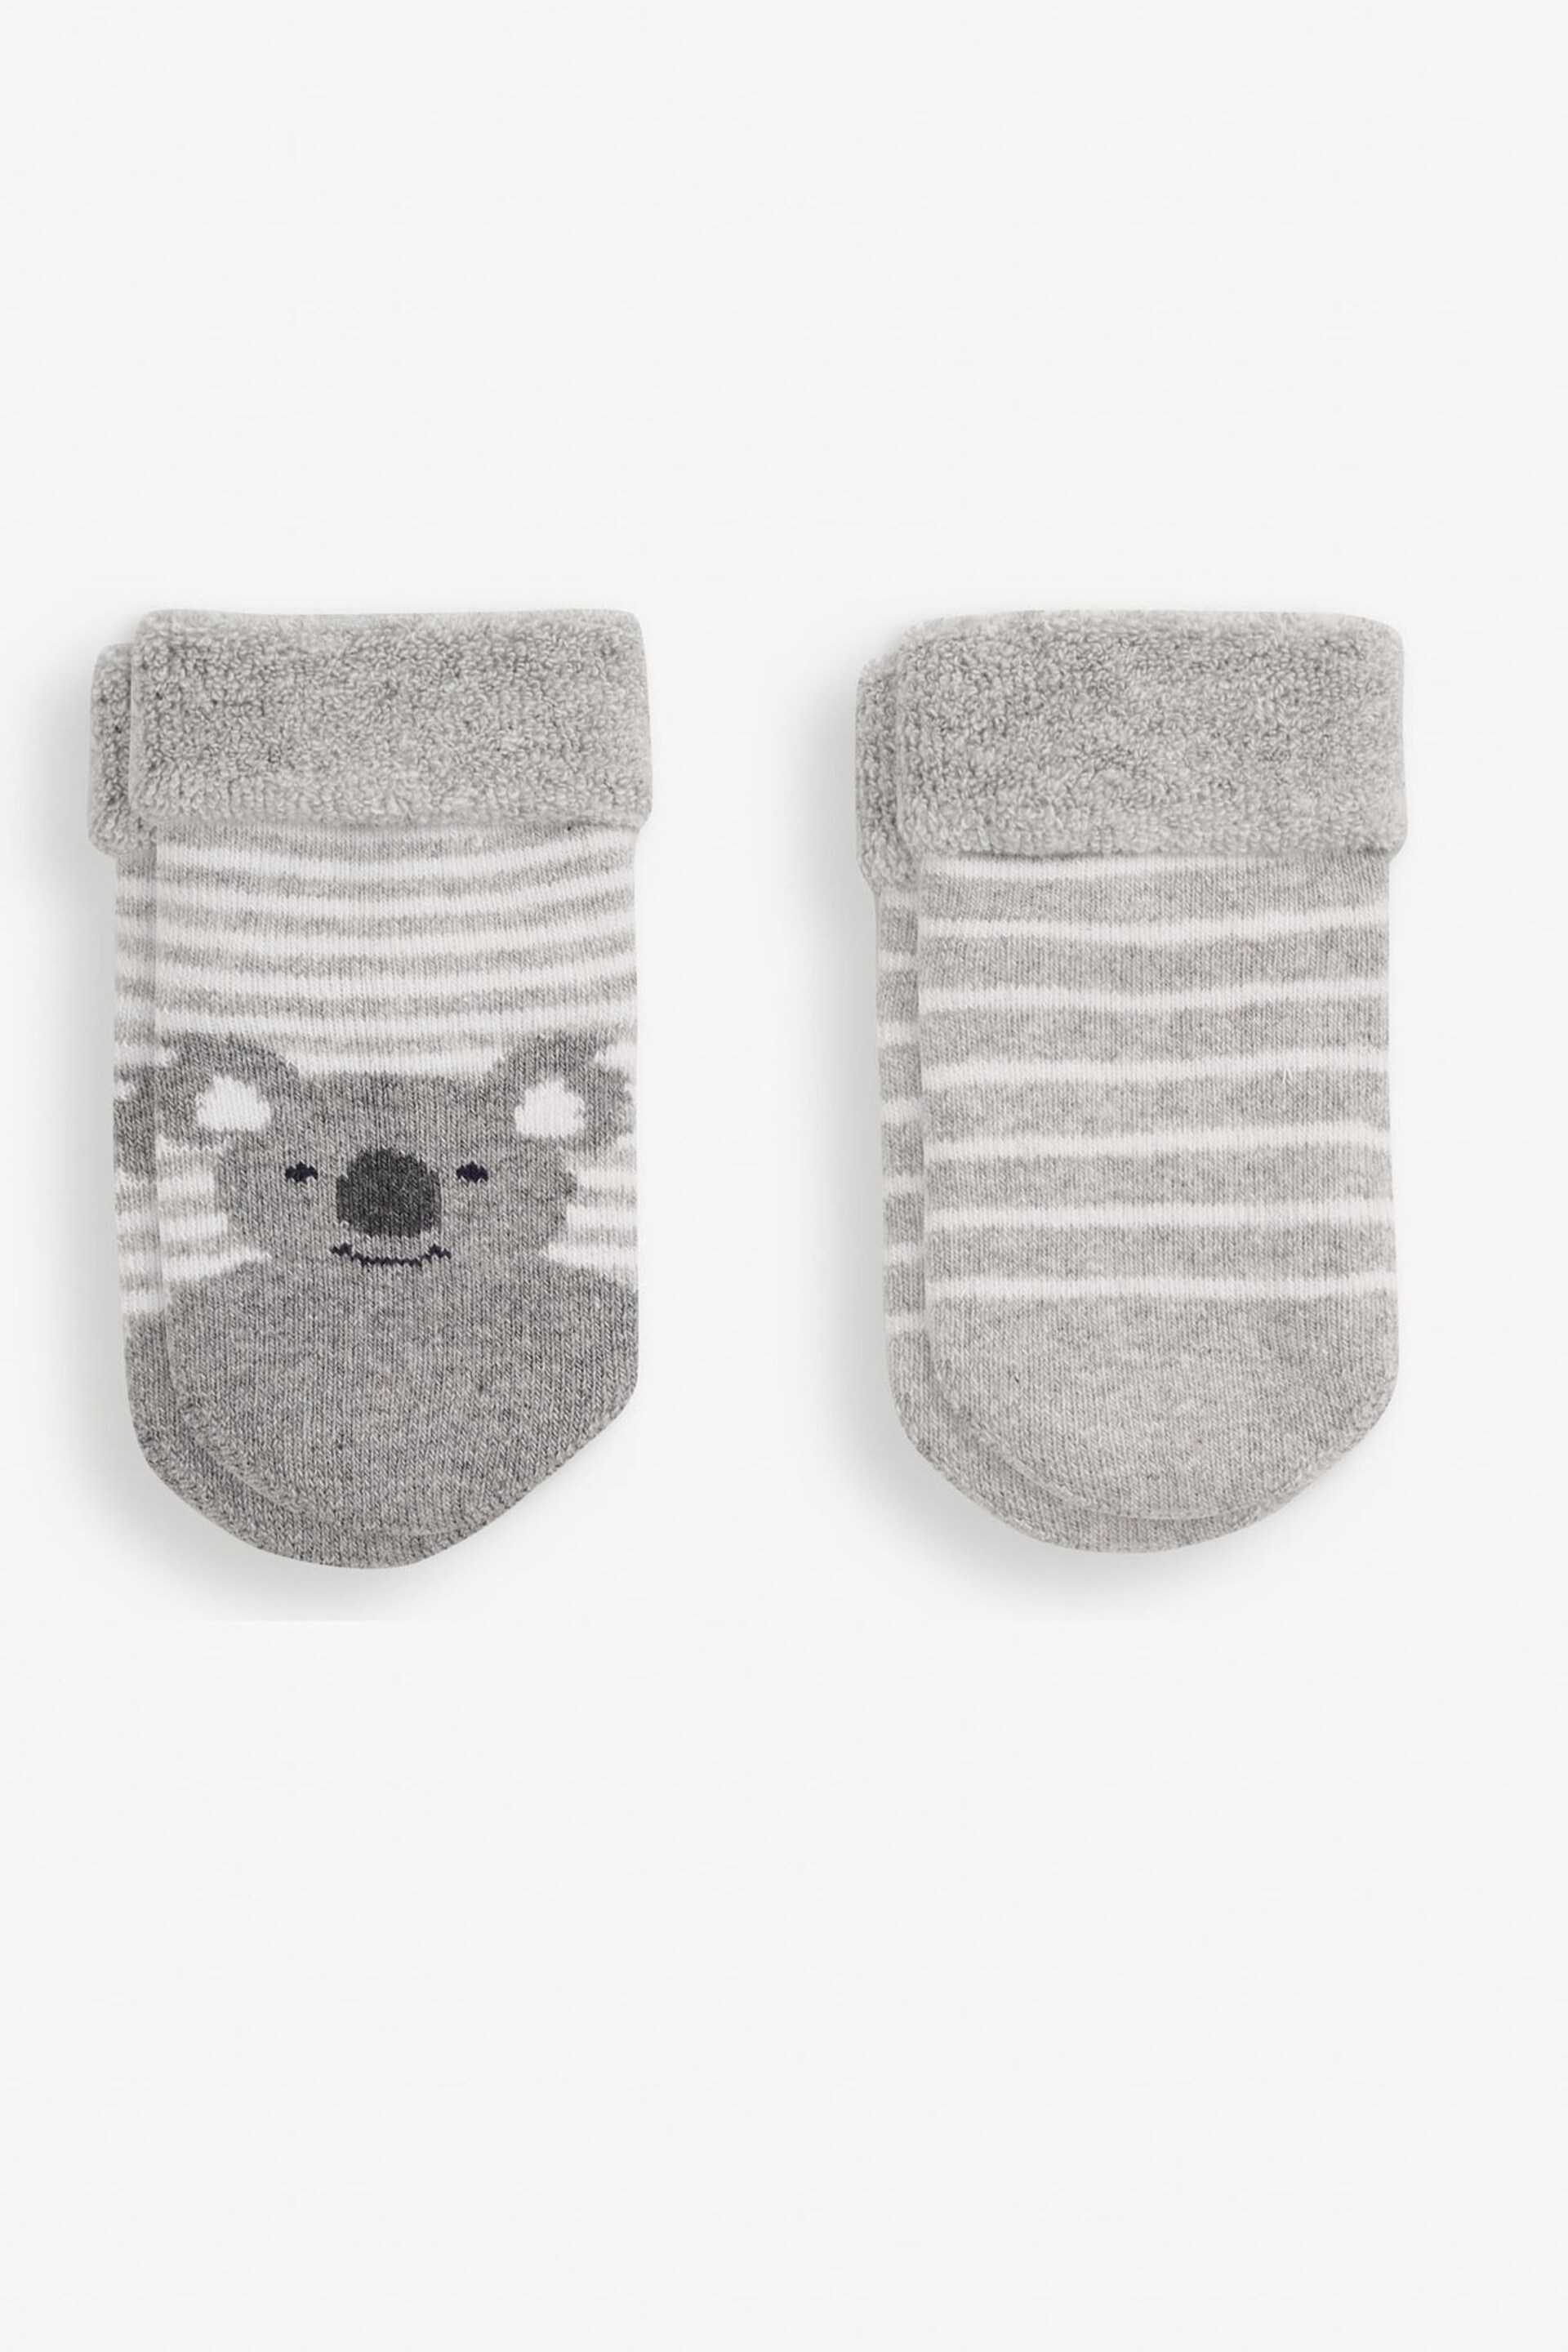 JoJo Maman Bébé Grey Koala 2-Pack Baby Socks - Image 1 of 1